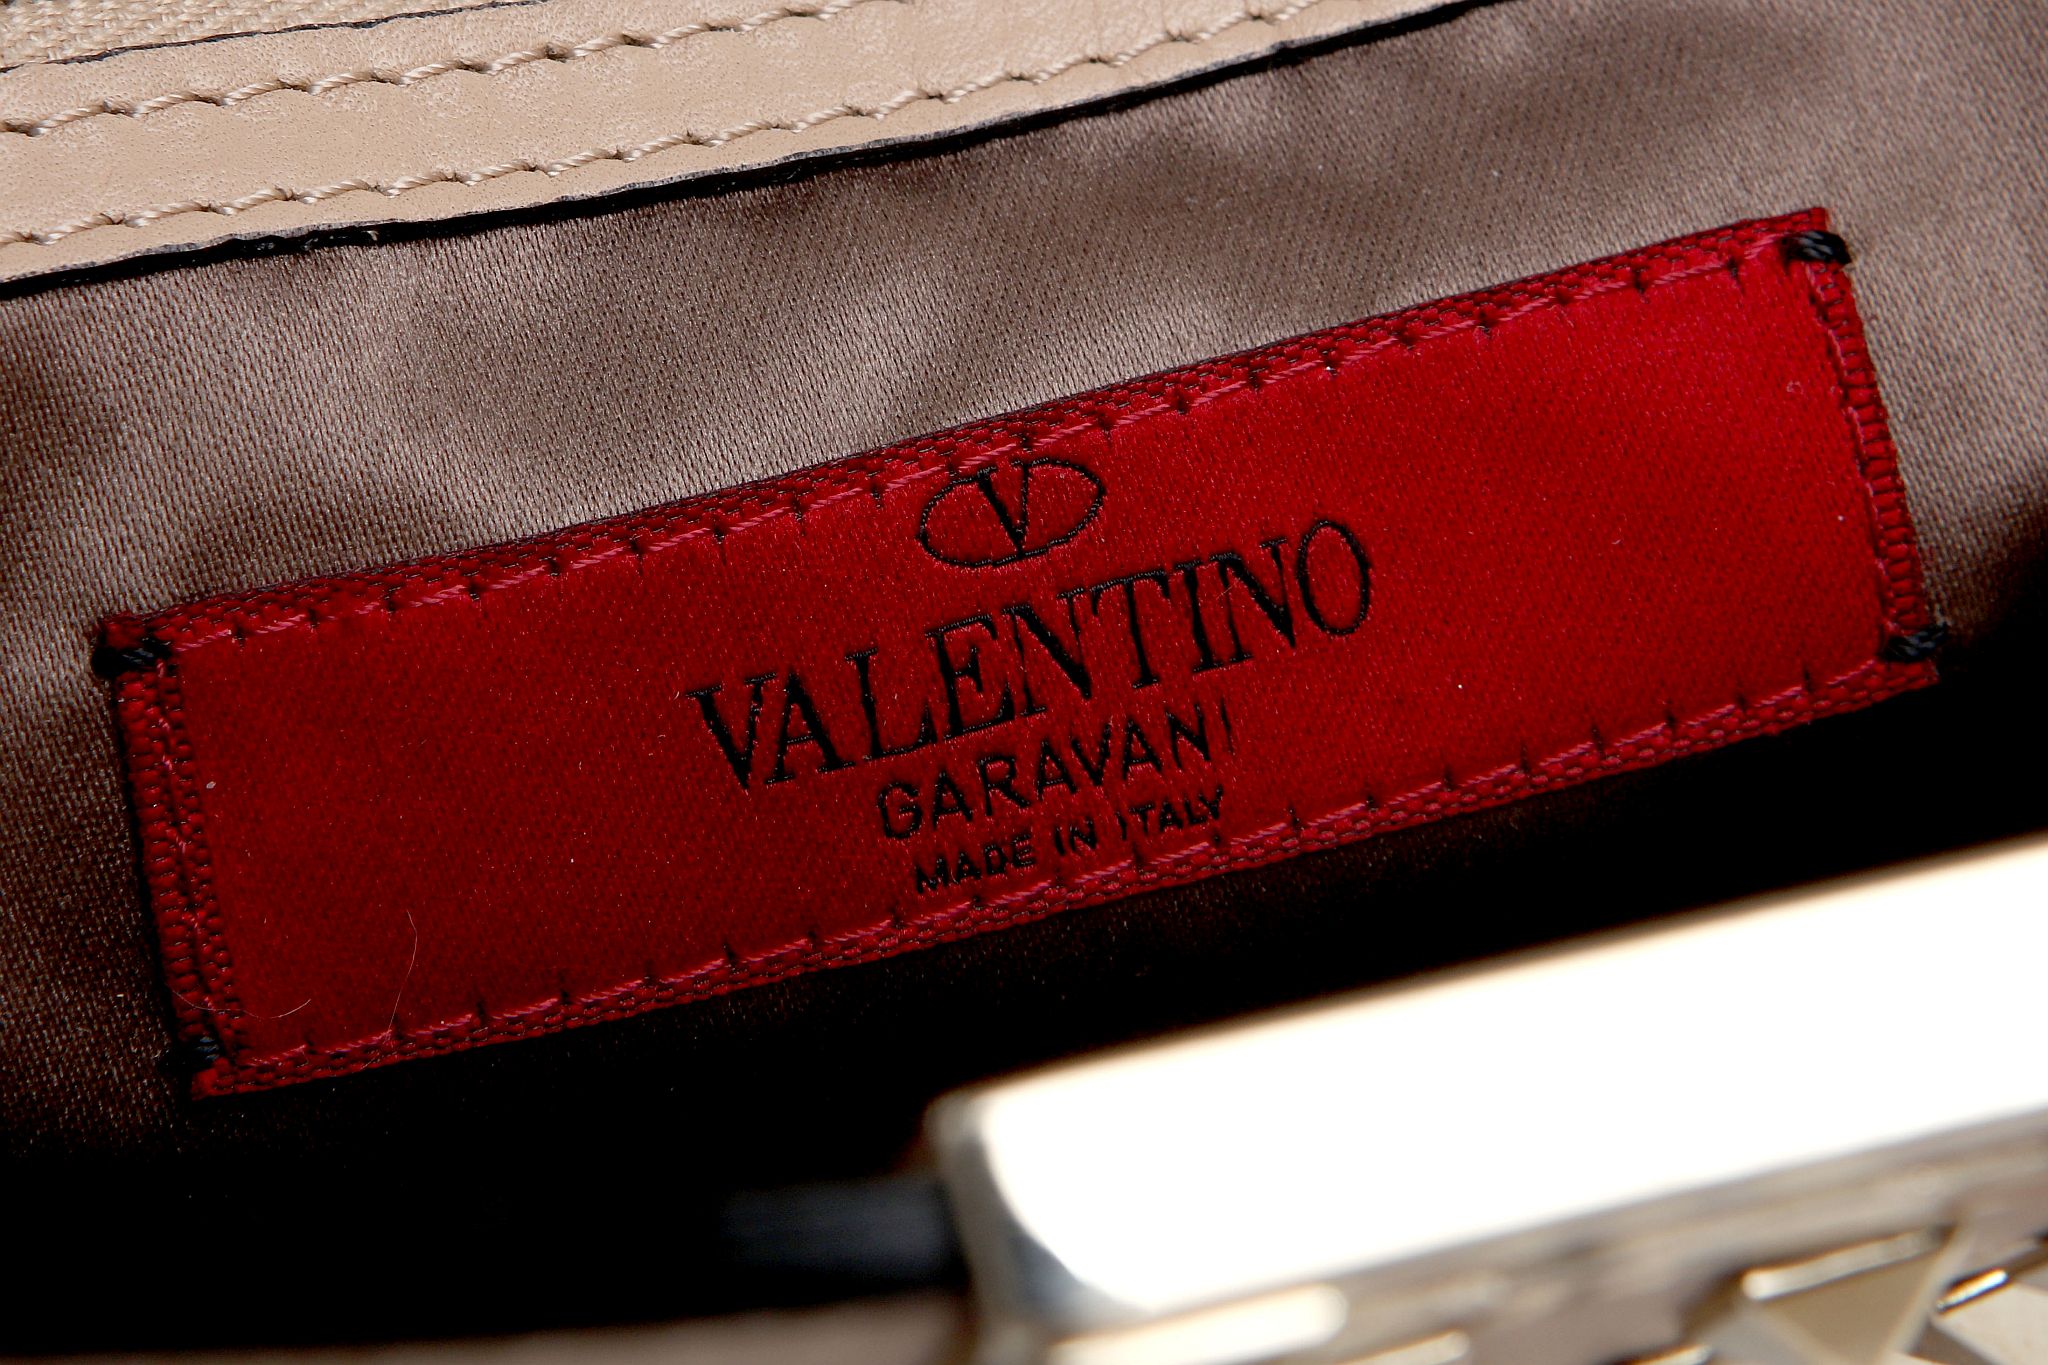 VALENTINO ROCKSTUD SHOULDER BAG, nude leather with all over chrome stud decoration, 32cm wide, - Image 9 of 12